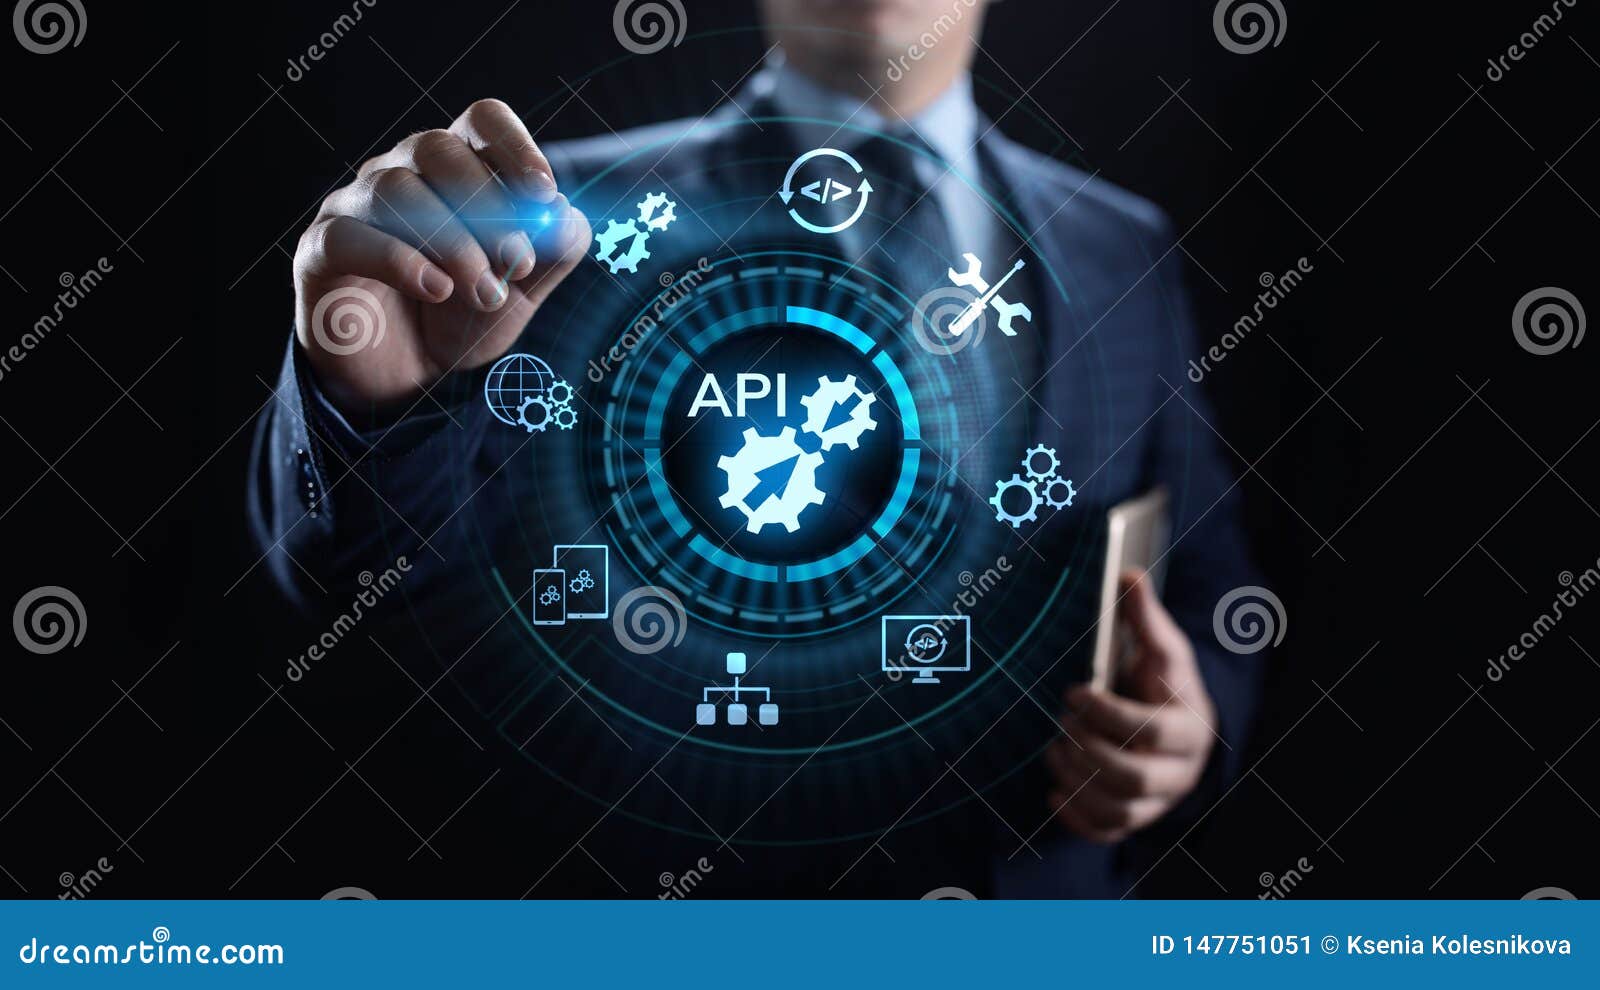 api application programming interface development technology concept.